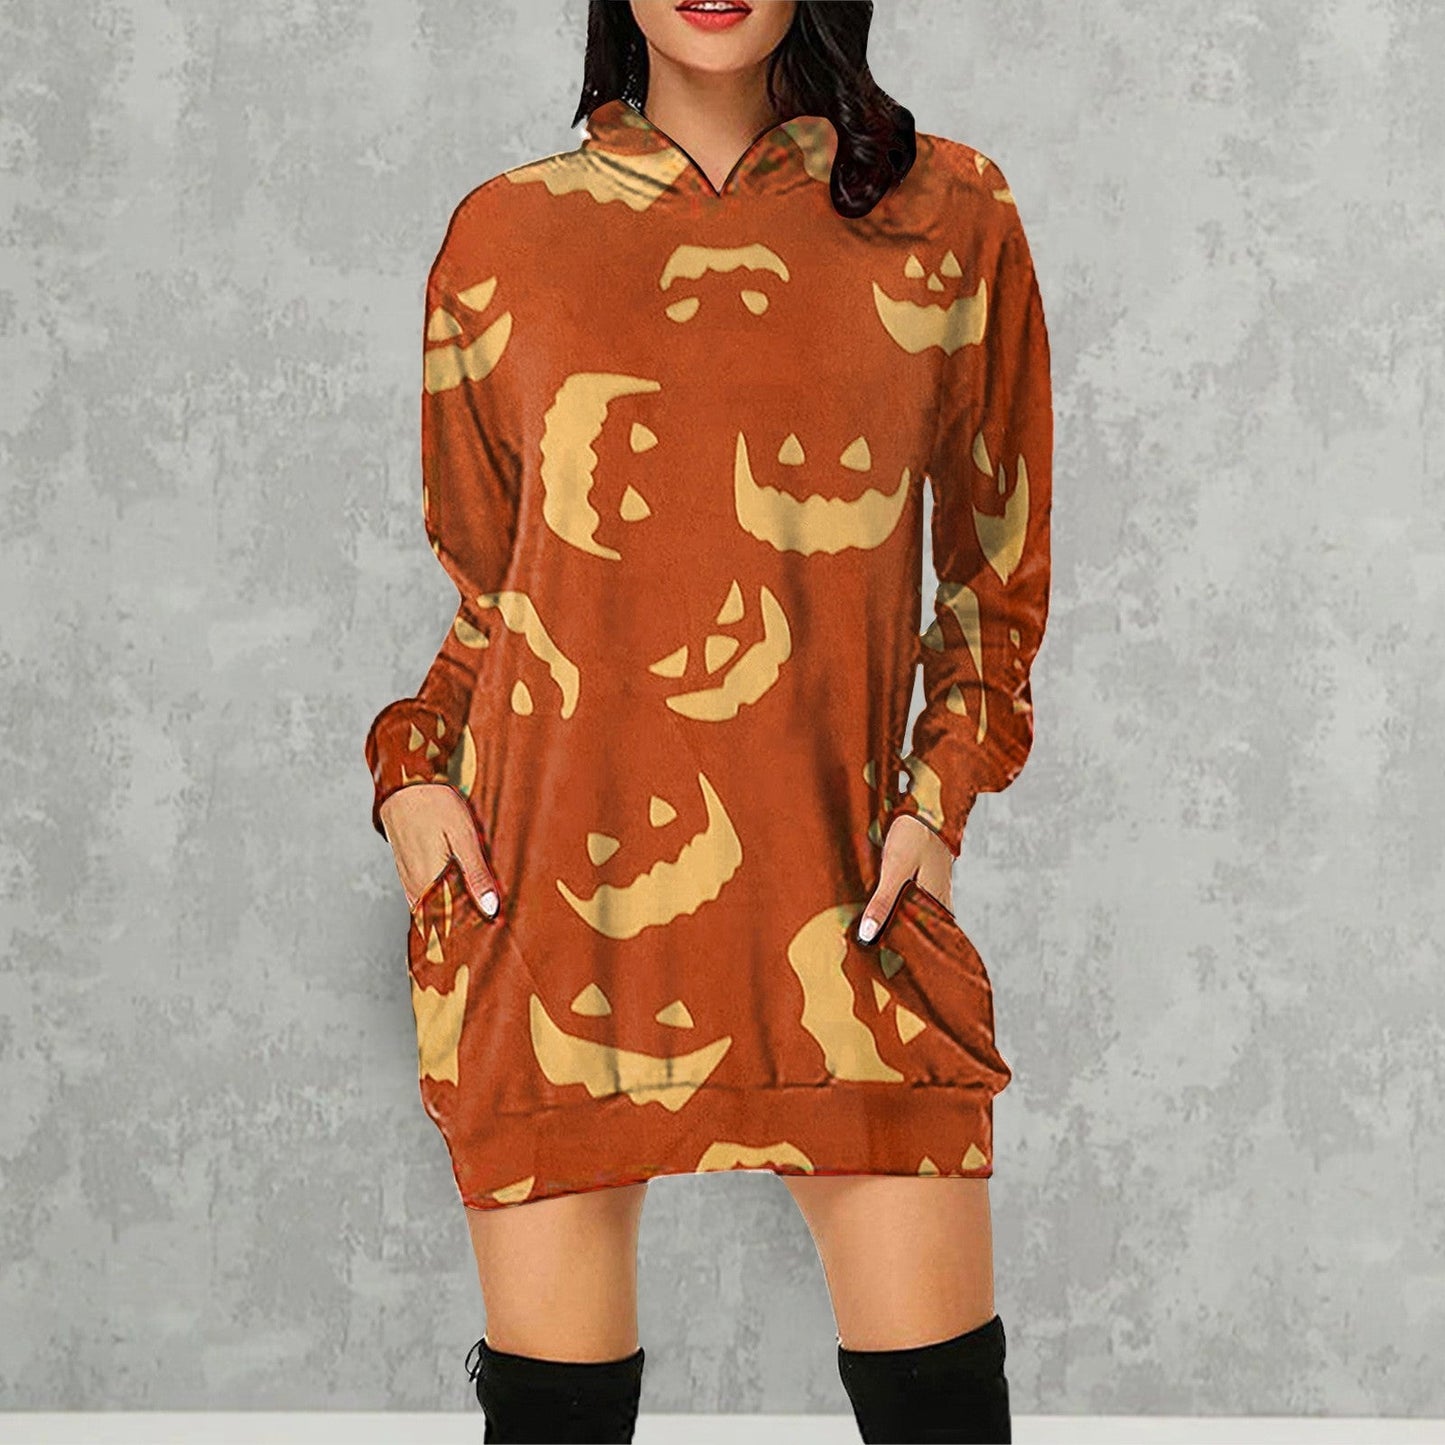 Halloween Pumpkin Design Long Sleeves Hoodies for Women-Orange Grimace-S-Free Shipping at meselling99